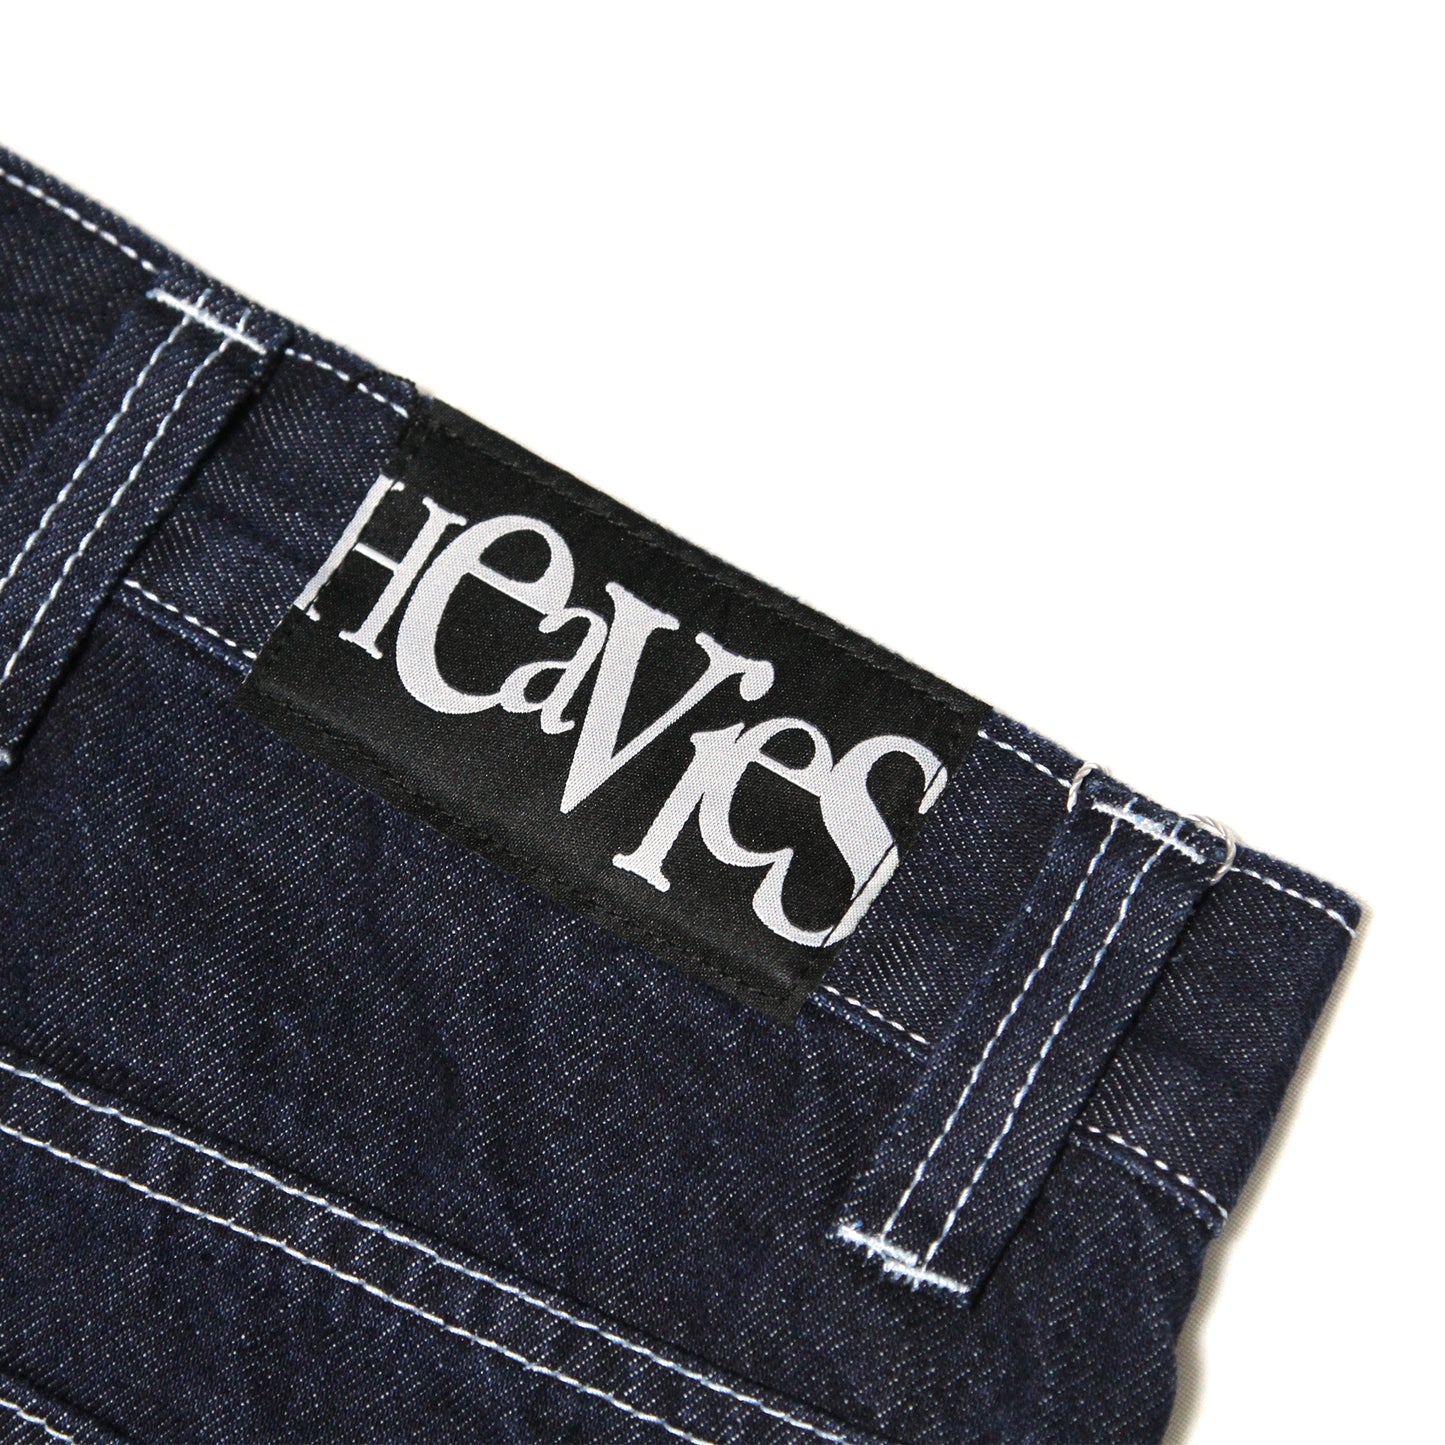 MOTO-BUNKA X HEAVIES - Collaboration Jeans/Deep Blue